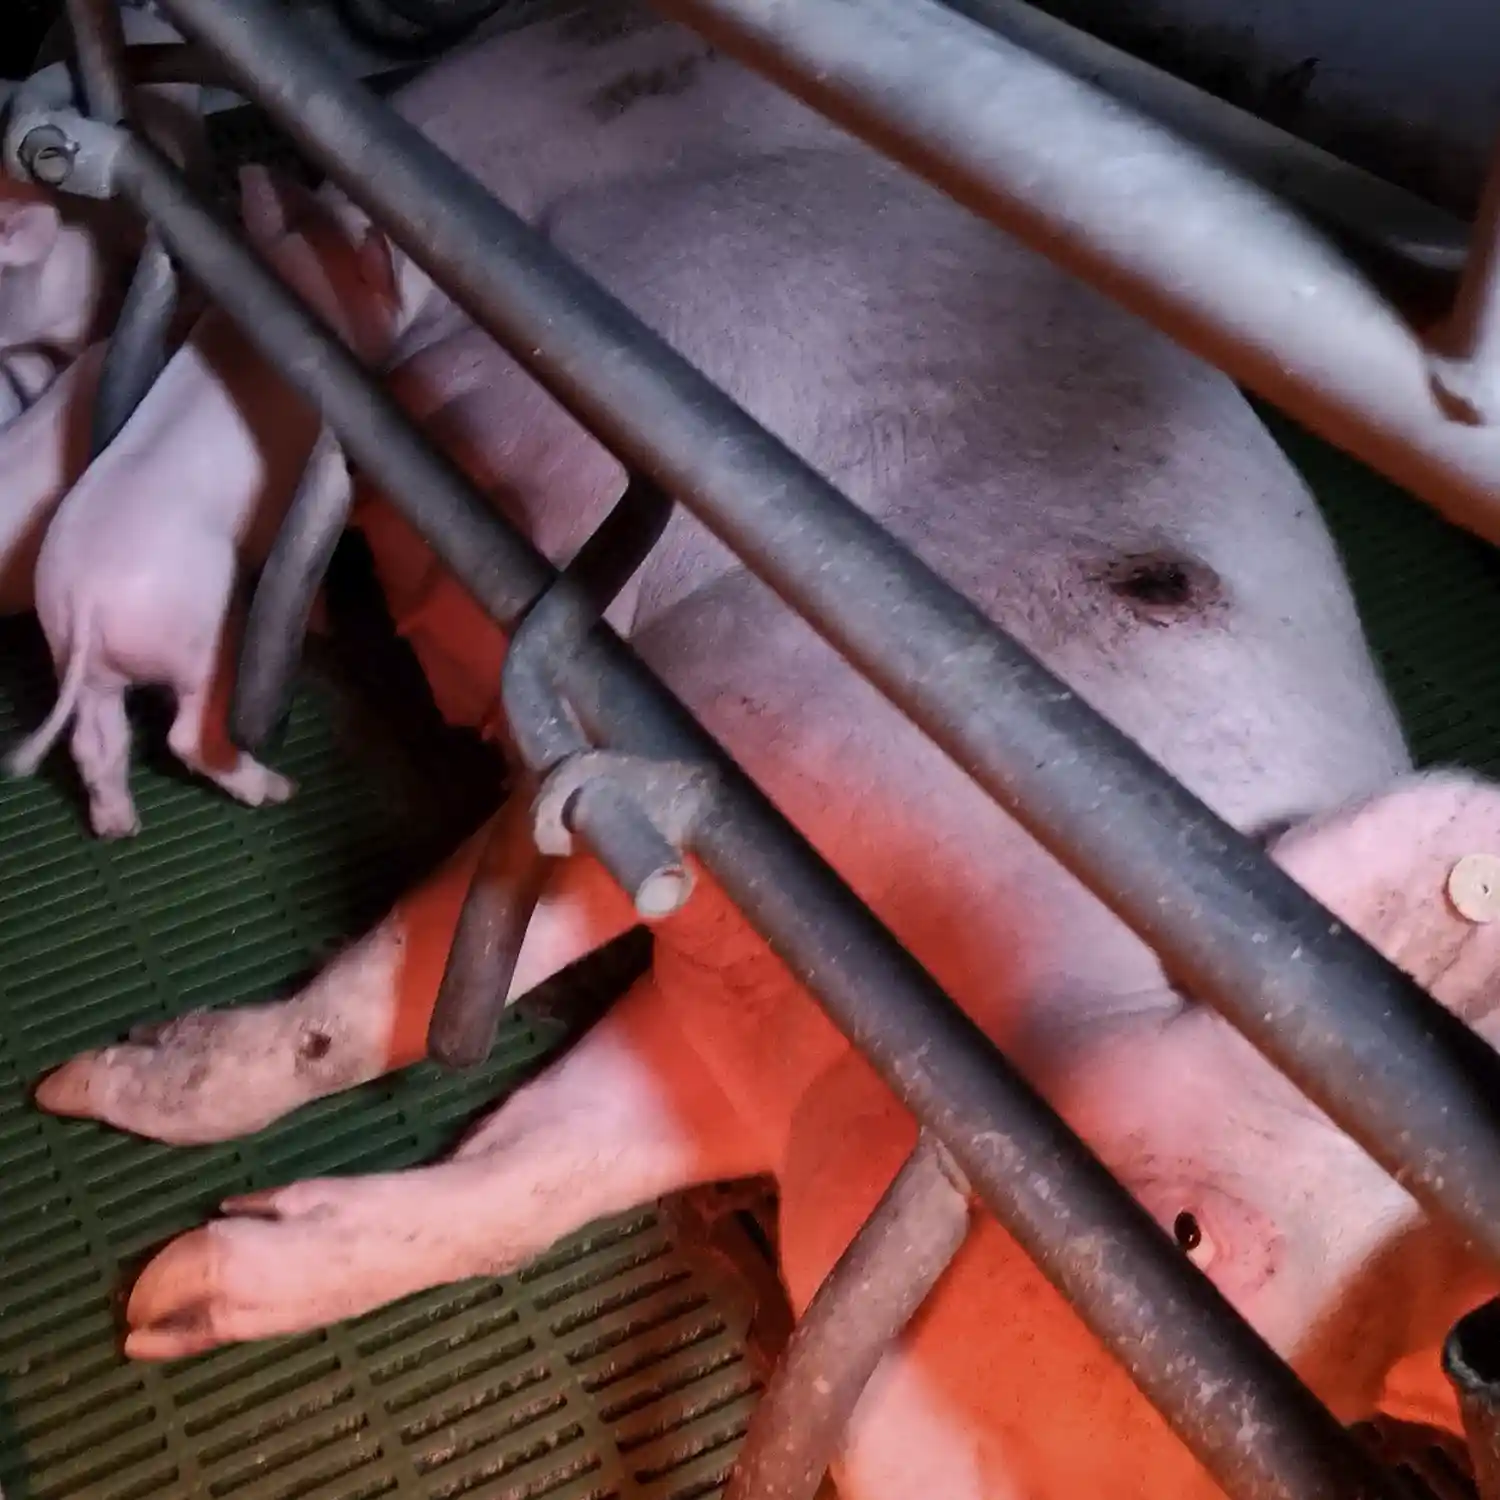 Pig inside a farrowing crate in an Italian factory farm